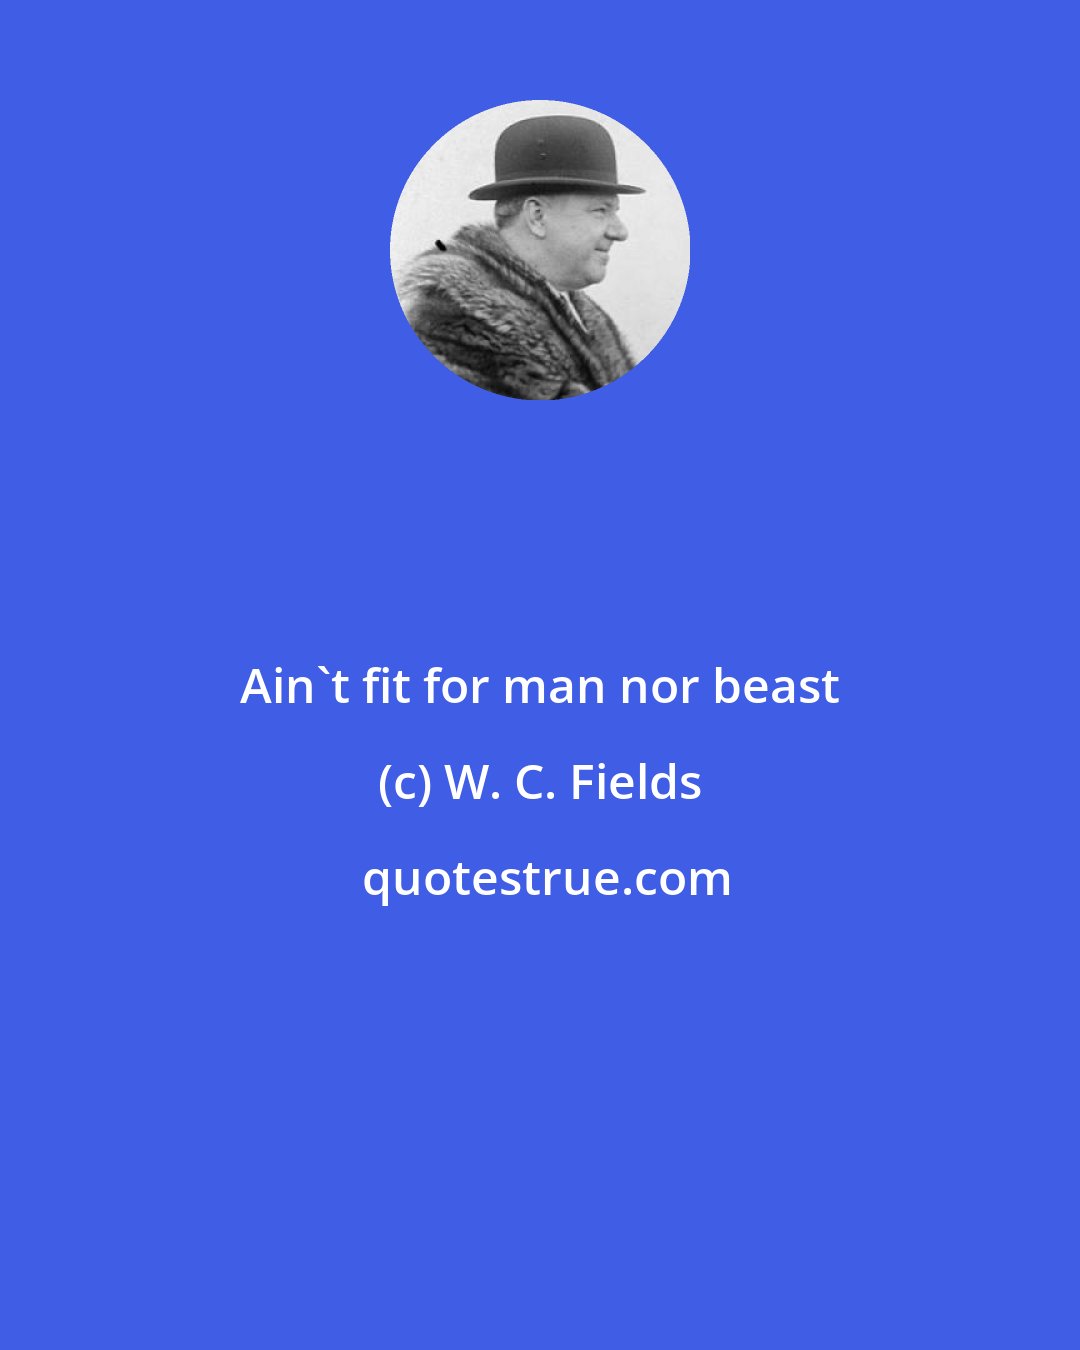 W. C. Fields: Ain't fit for man nor beast